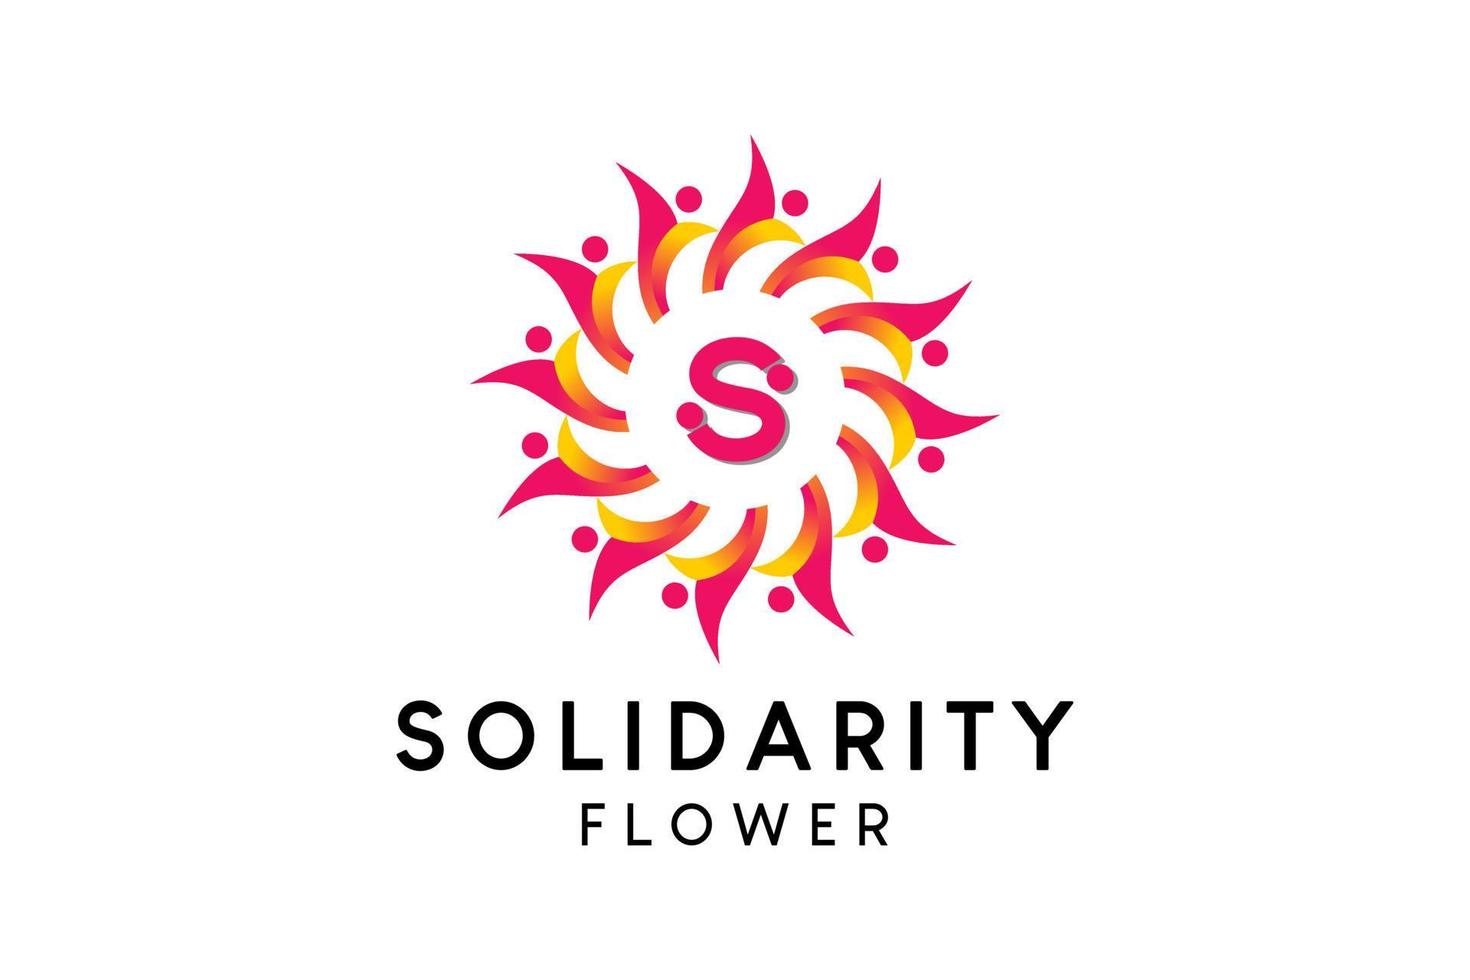 design de logotipo poderoso de caridade ou solidariedade com conceito de flor vetor